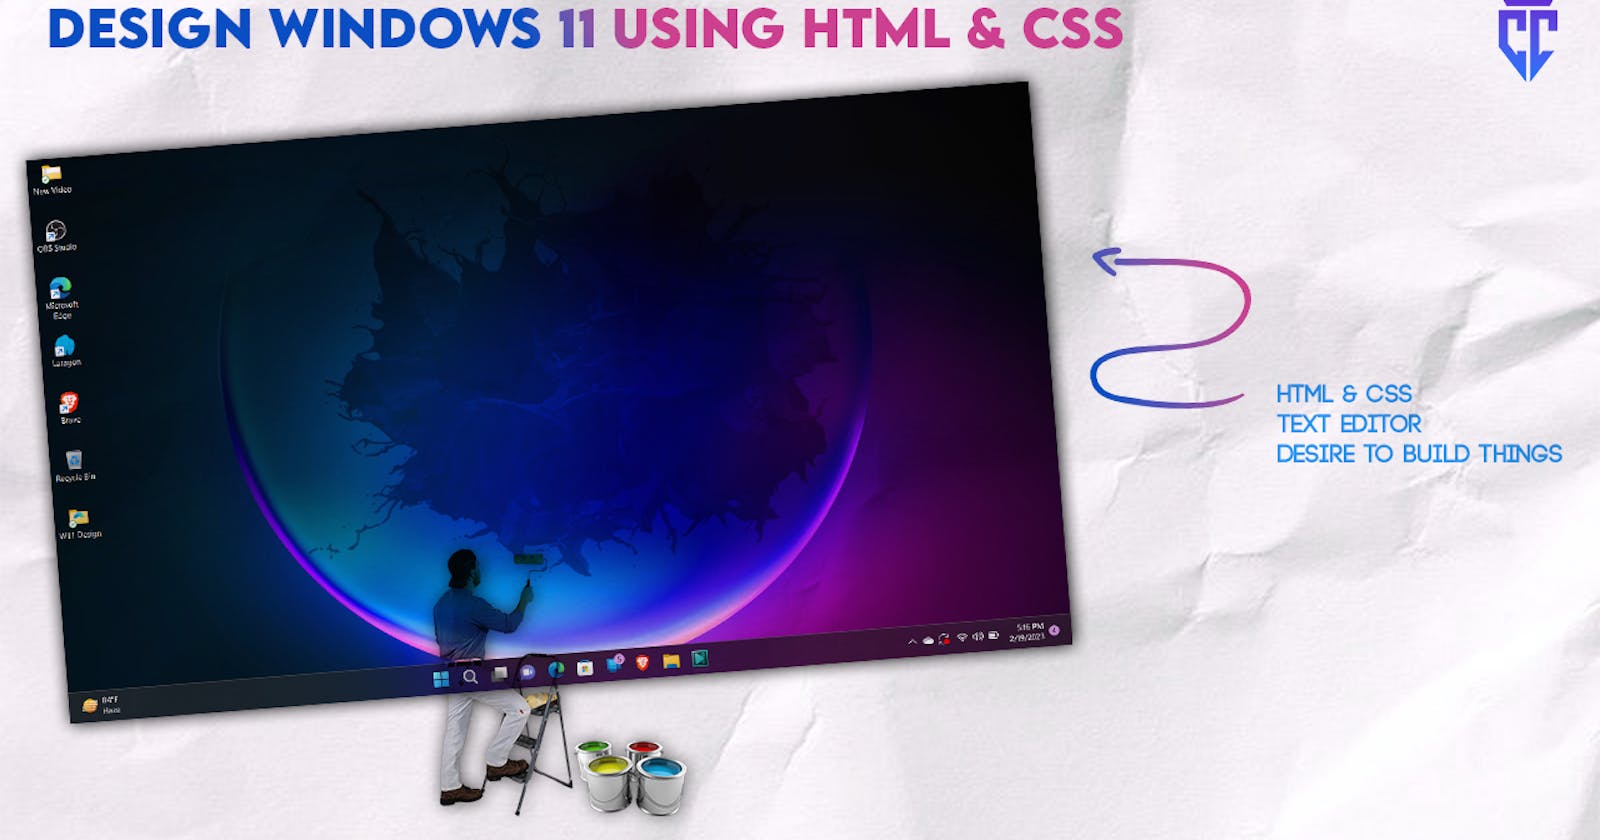 Windows 11 Design Using HTML & CSS